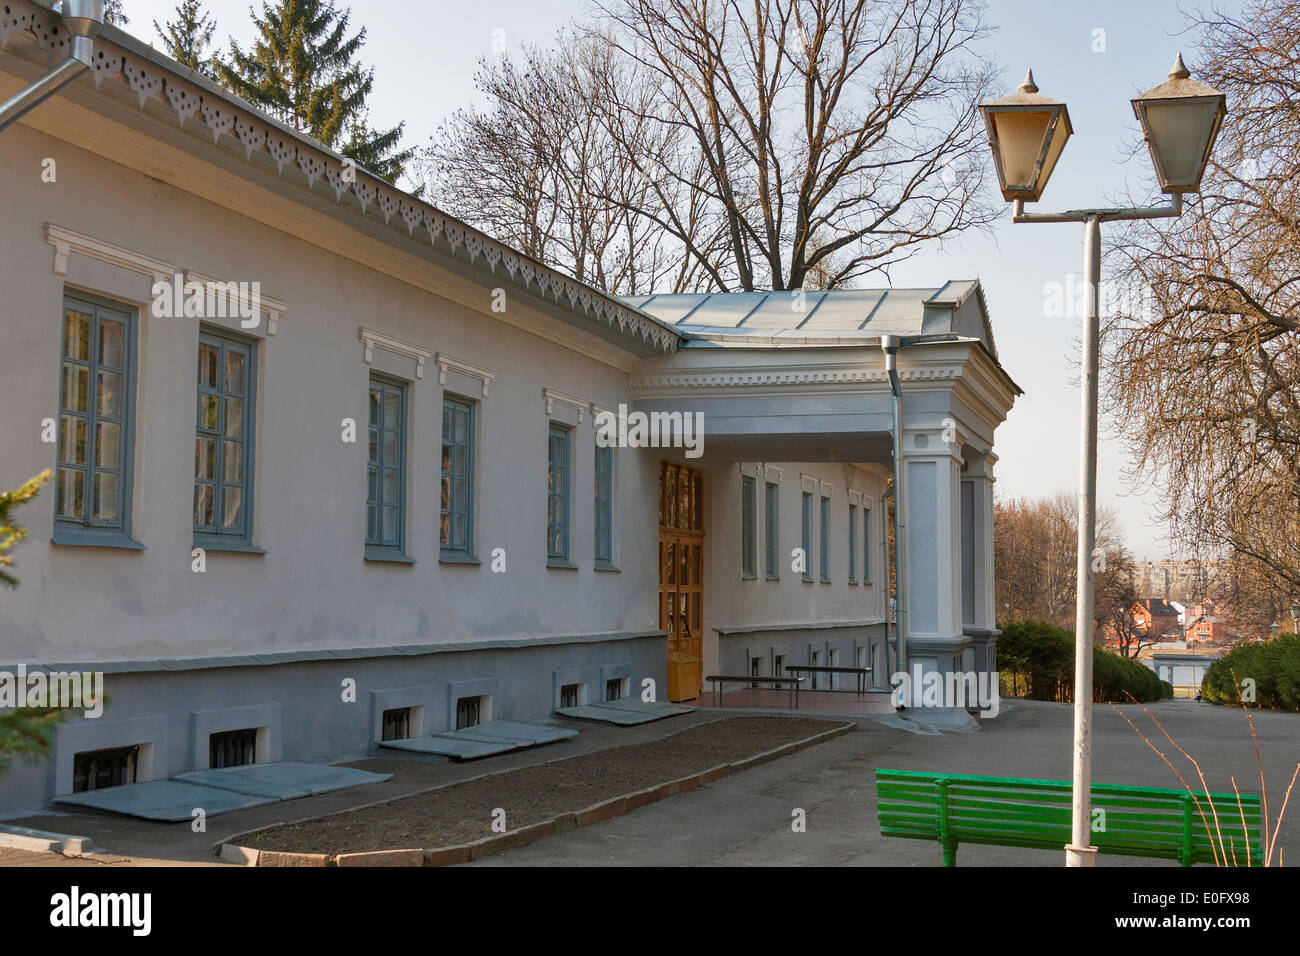 Family House Estate of Nikolay Pirogov, a prominent Russian and Ukrainian surgeon. It was built 1866 in Vinnitsa, Ukraine. Stock Photo